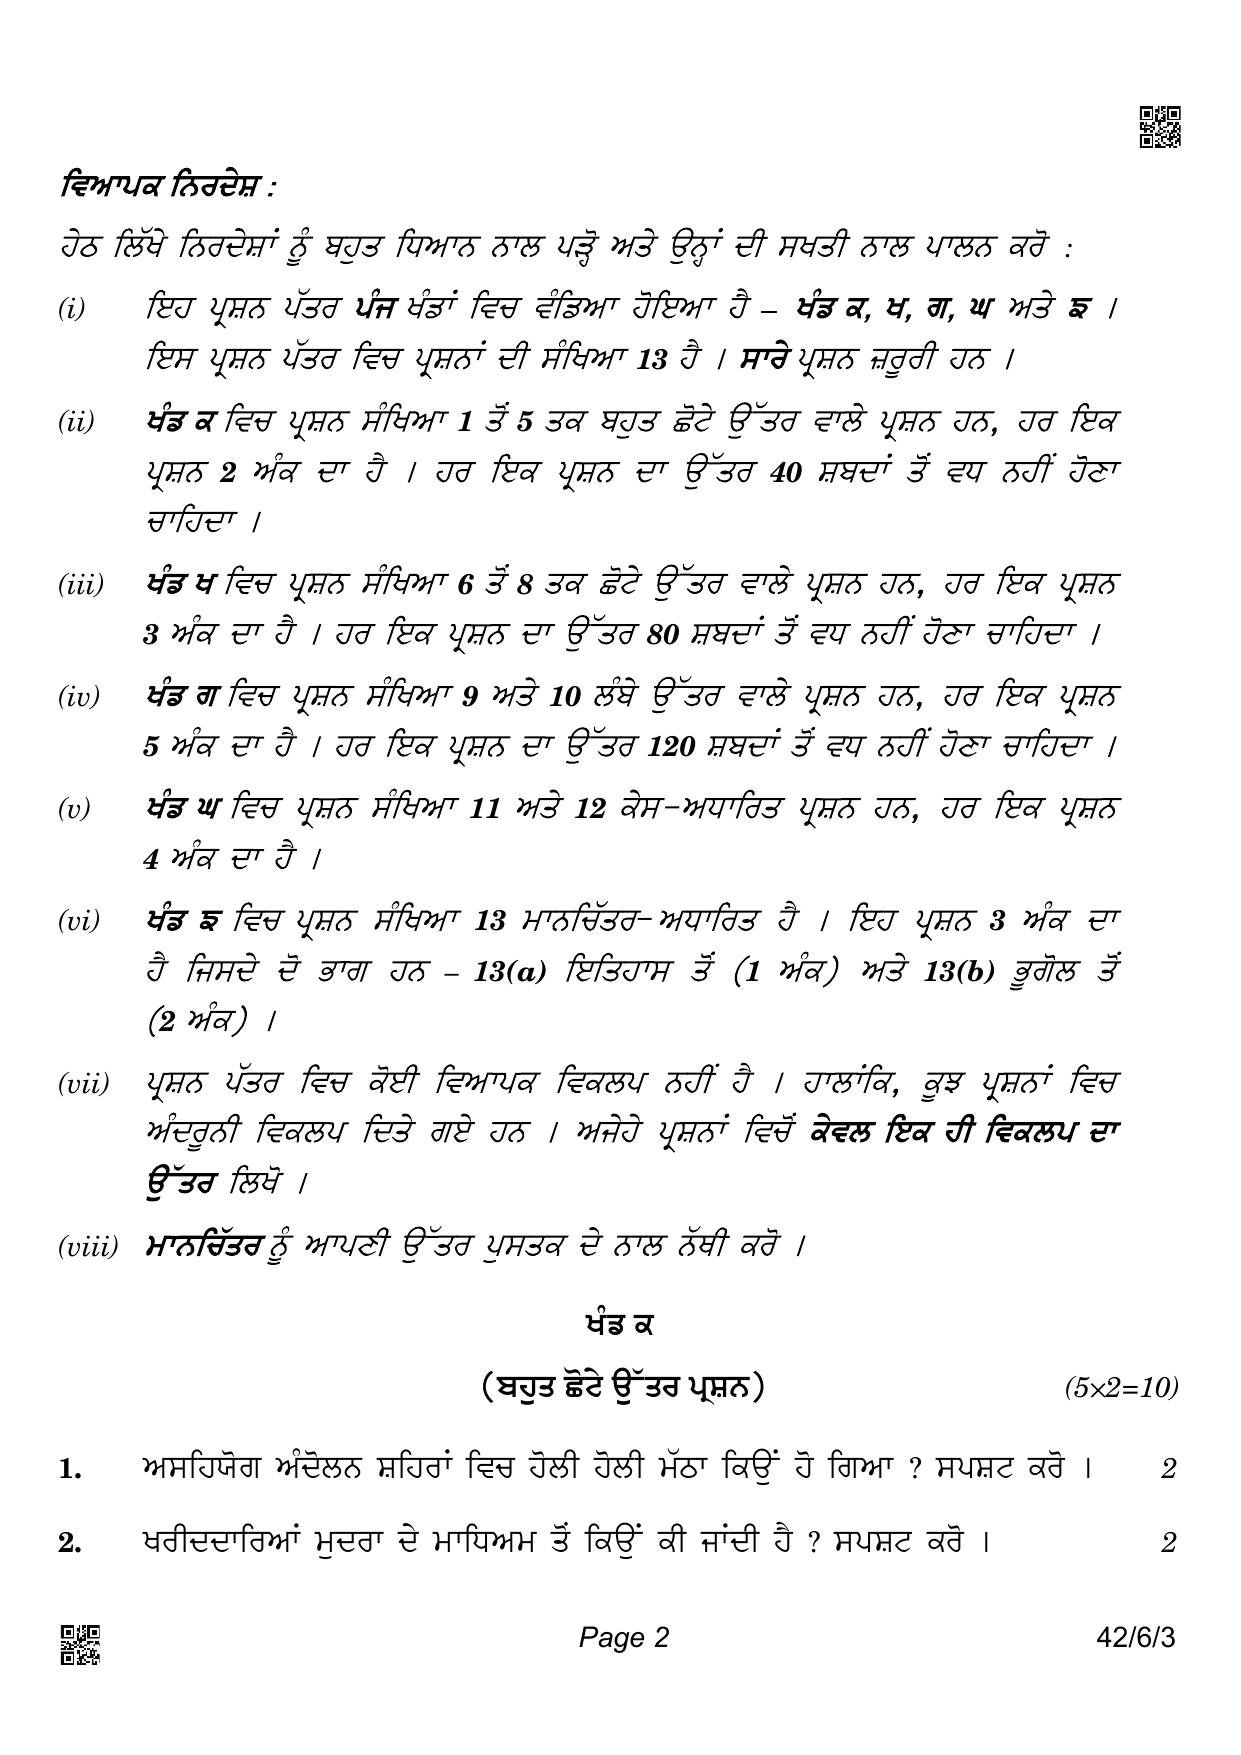 CBSE Class 10 42-6-3_Social Science Punjabi Version 2022 Compartment Question Paper - Page 2